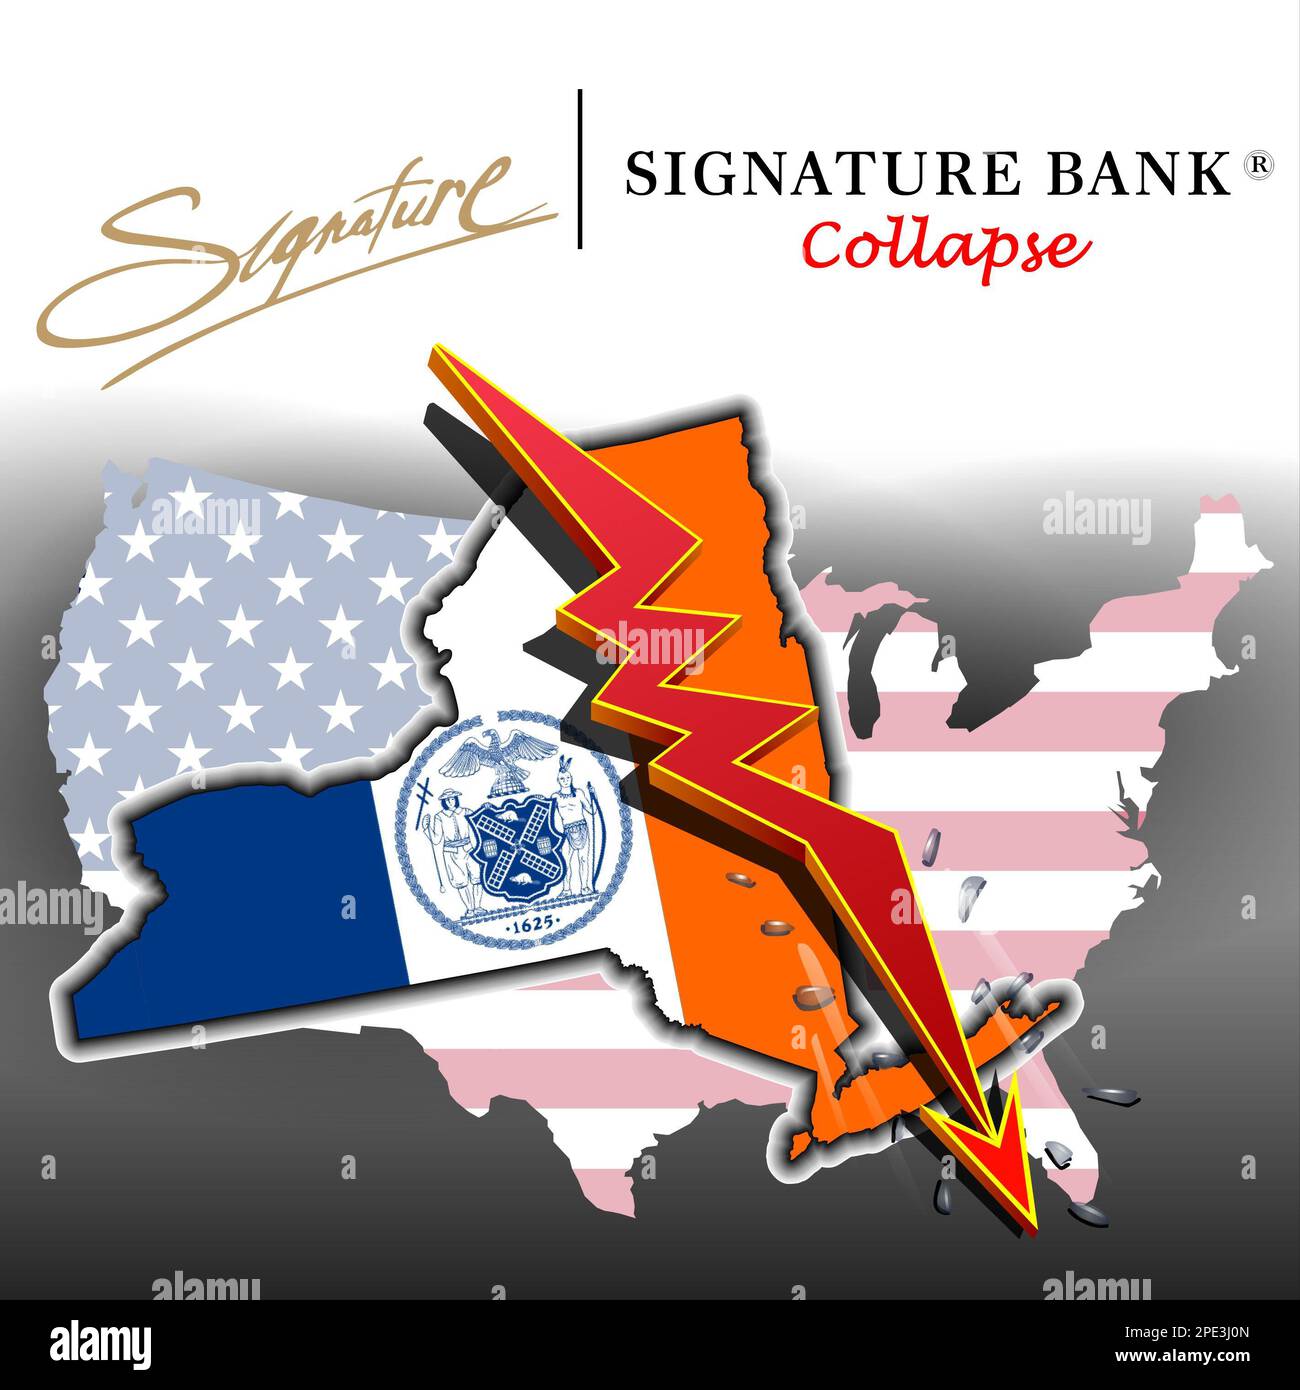 Signature Bank Collapse Stock Photo